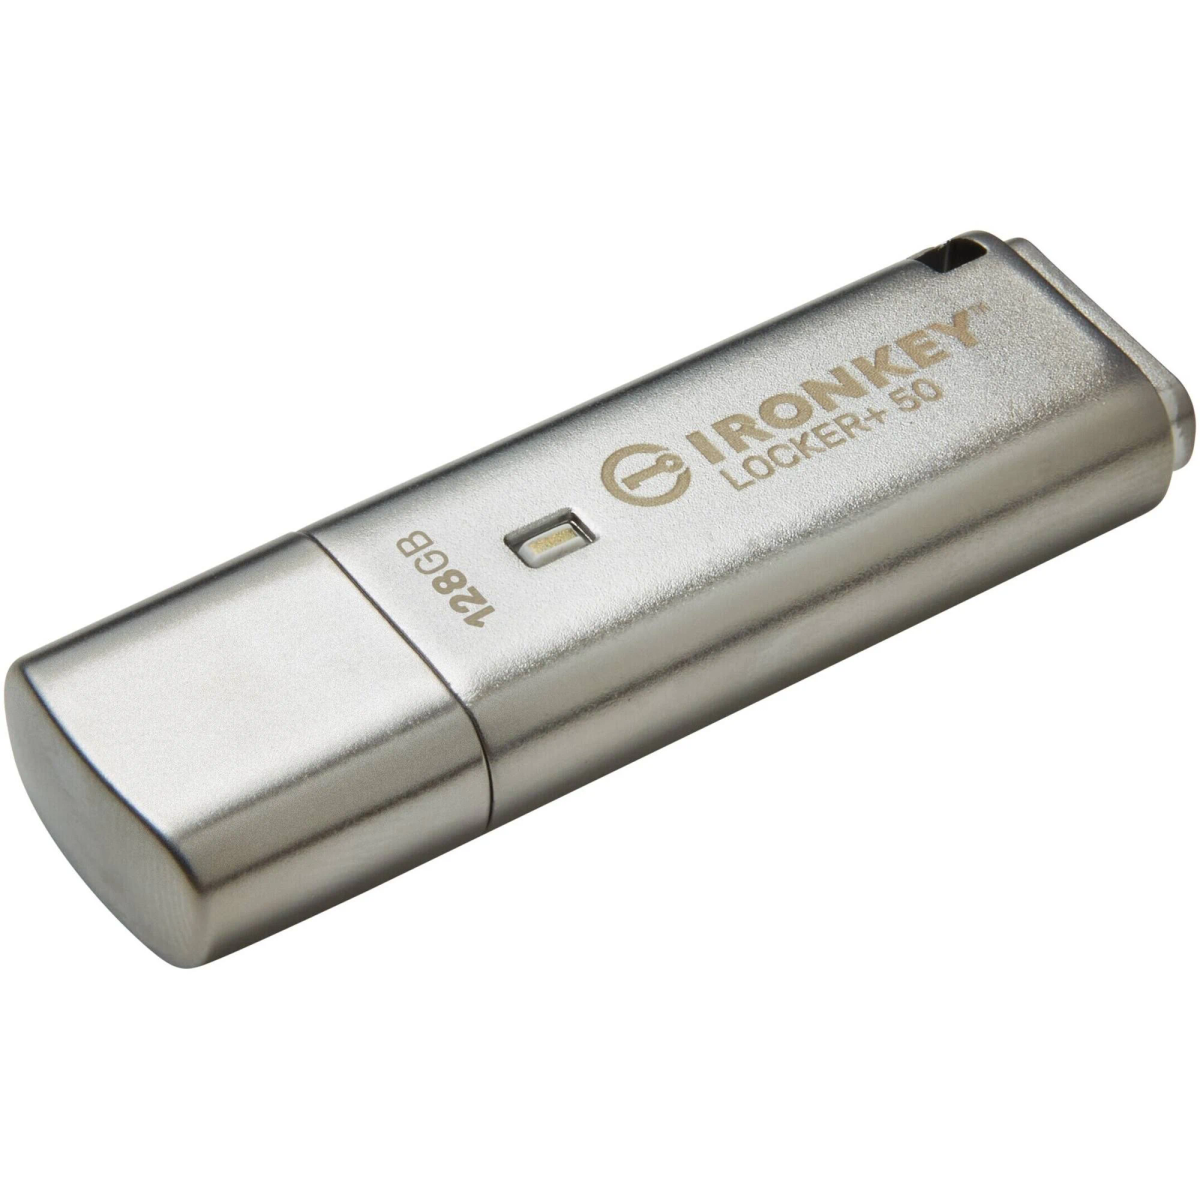 KINGSTON TECHNOLOGY IronKey Locker+ 50 128 Metall, USB-Flash-Laufwerk (Seilber, GB)